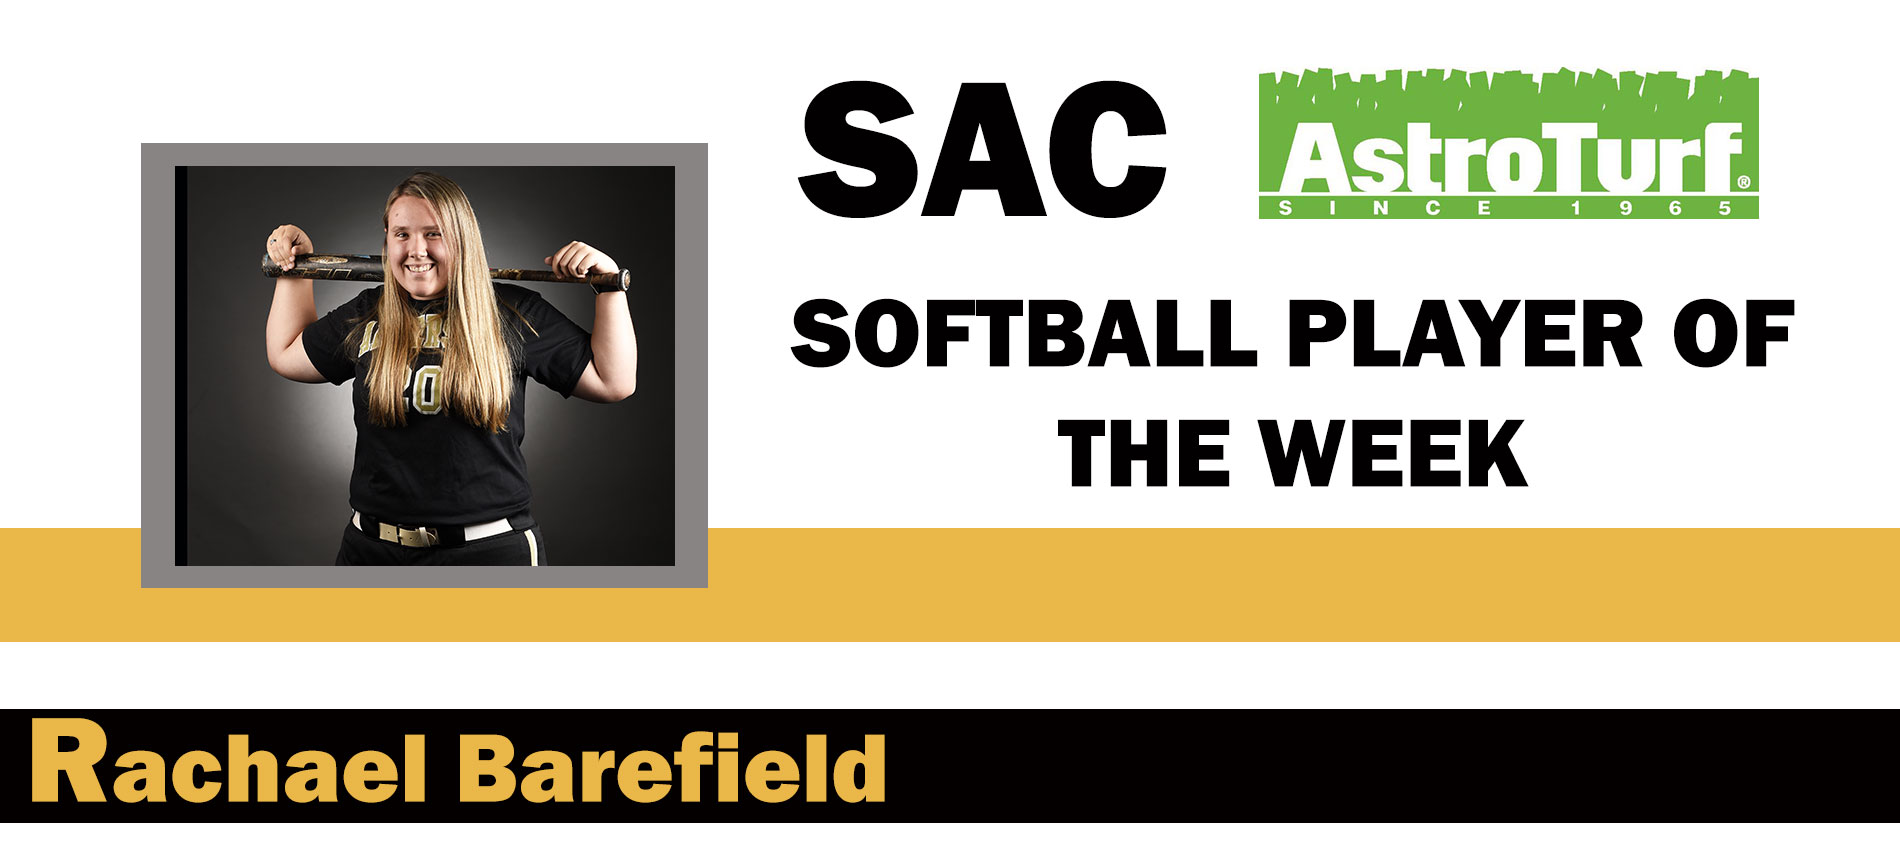 Barefield Named AstroTurf SAC Softball Player of the Week